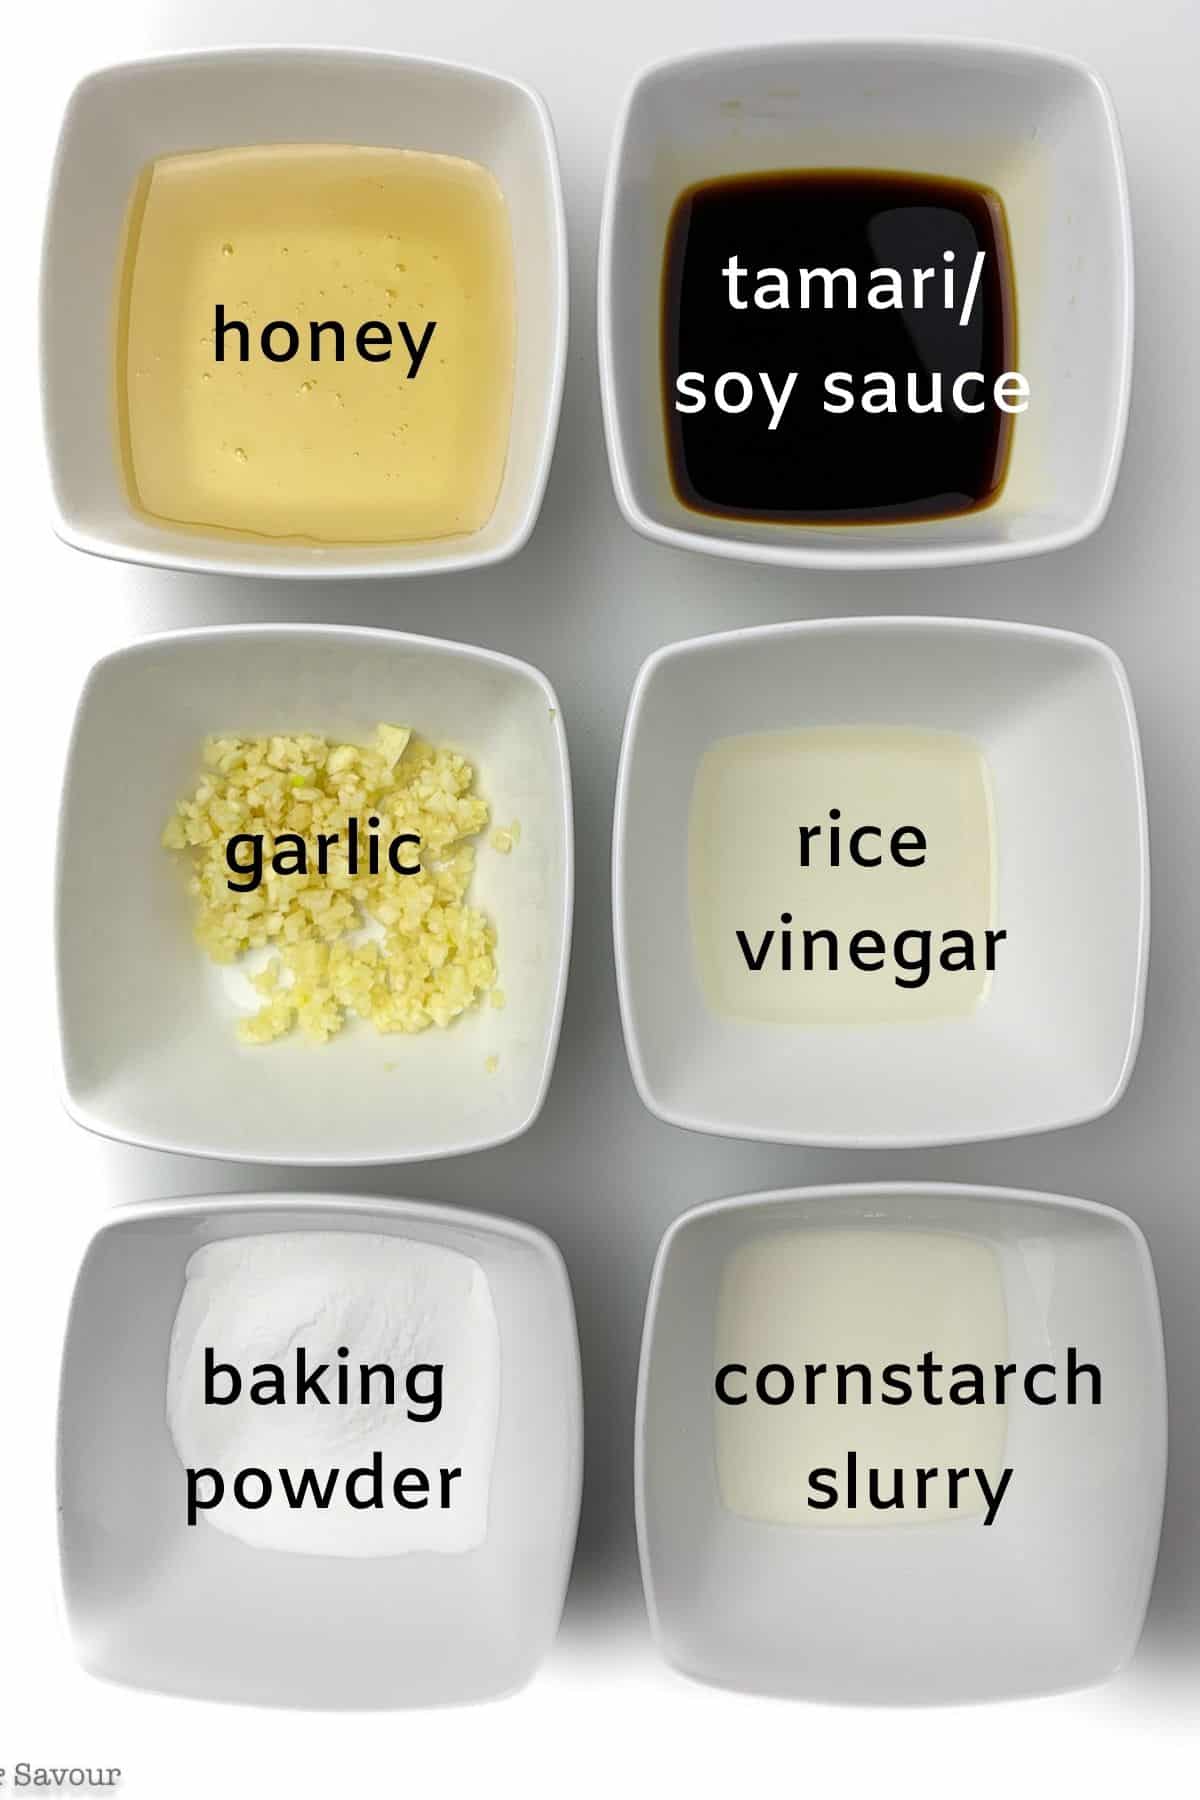 Labelled ingredients for Air Fryer Honey Garlic Chicken Wings.